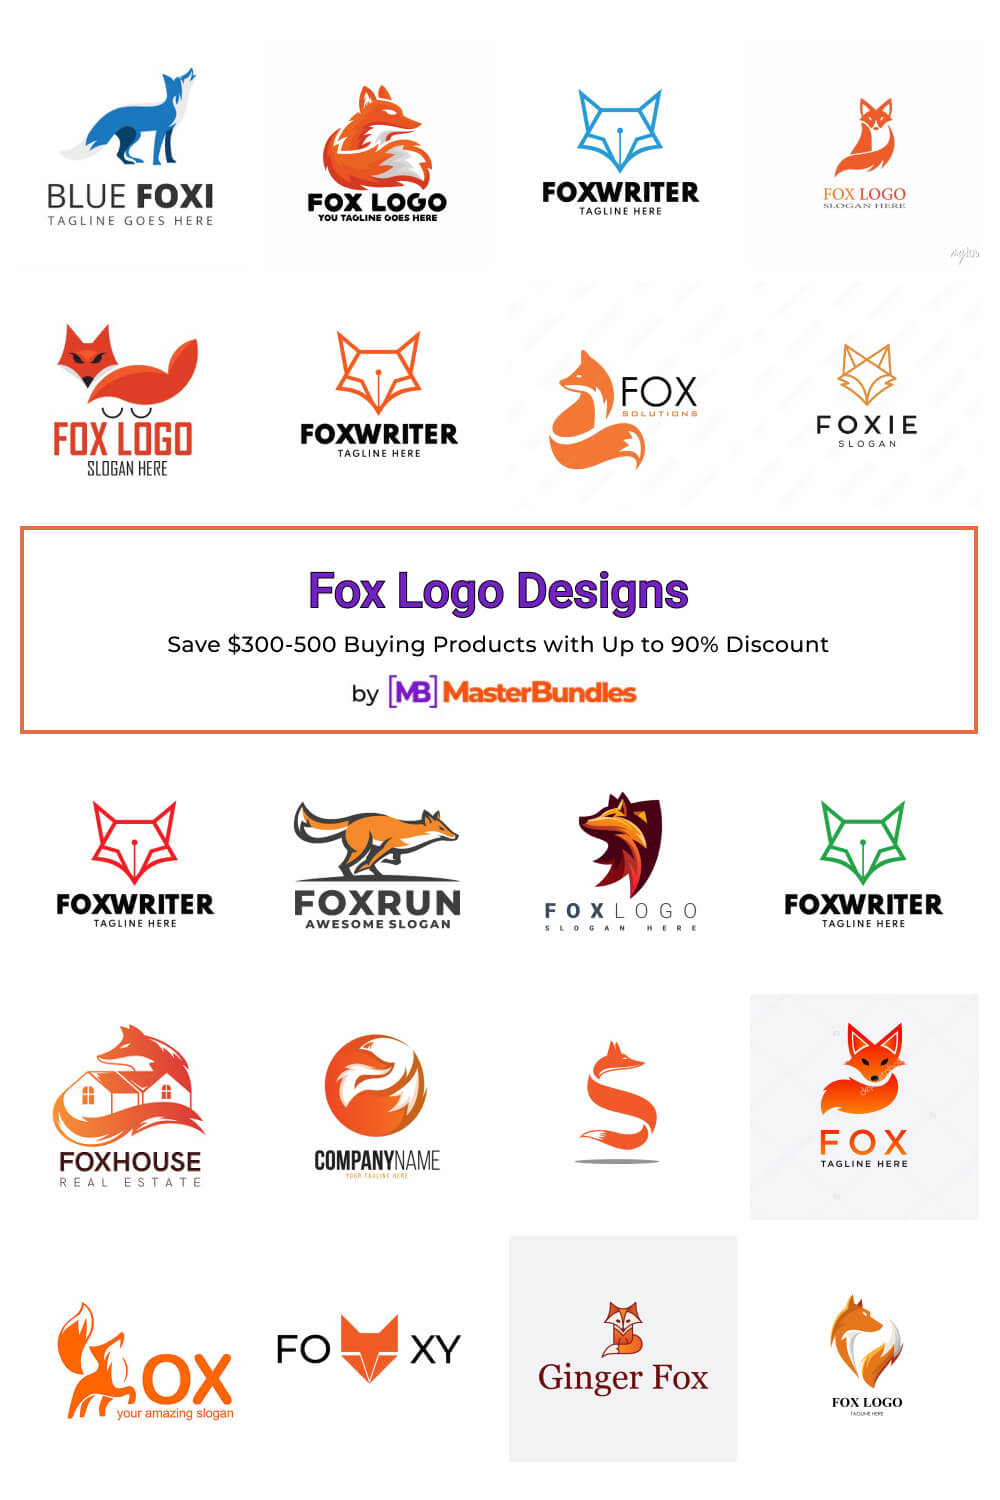 fox logo designs pinterest image.